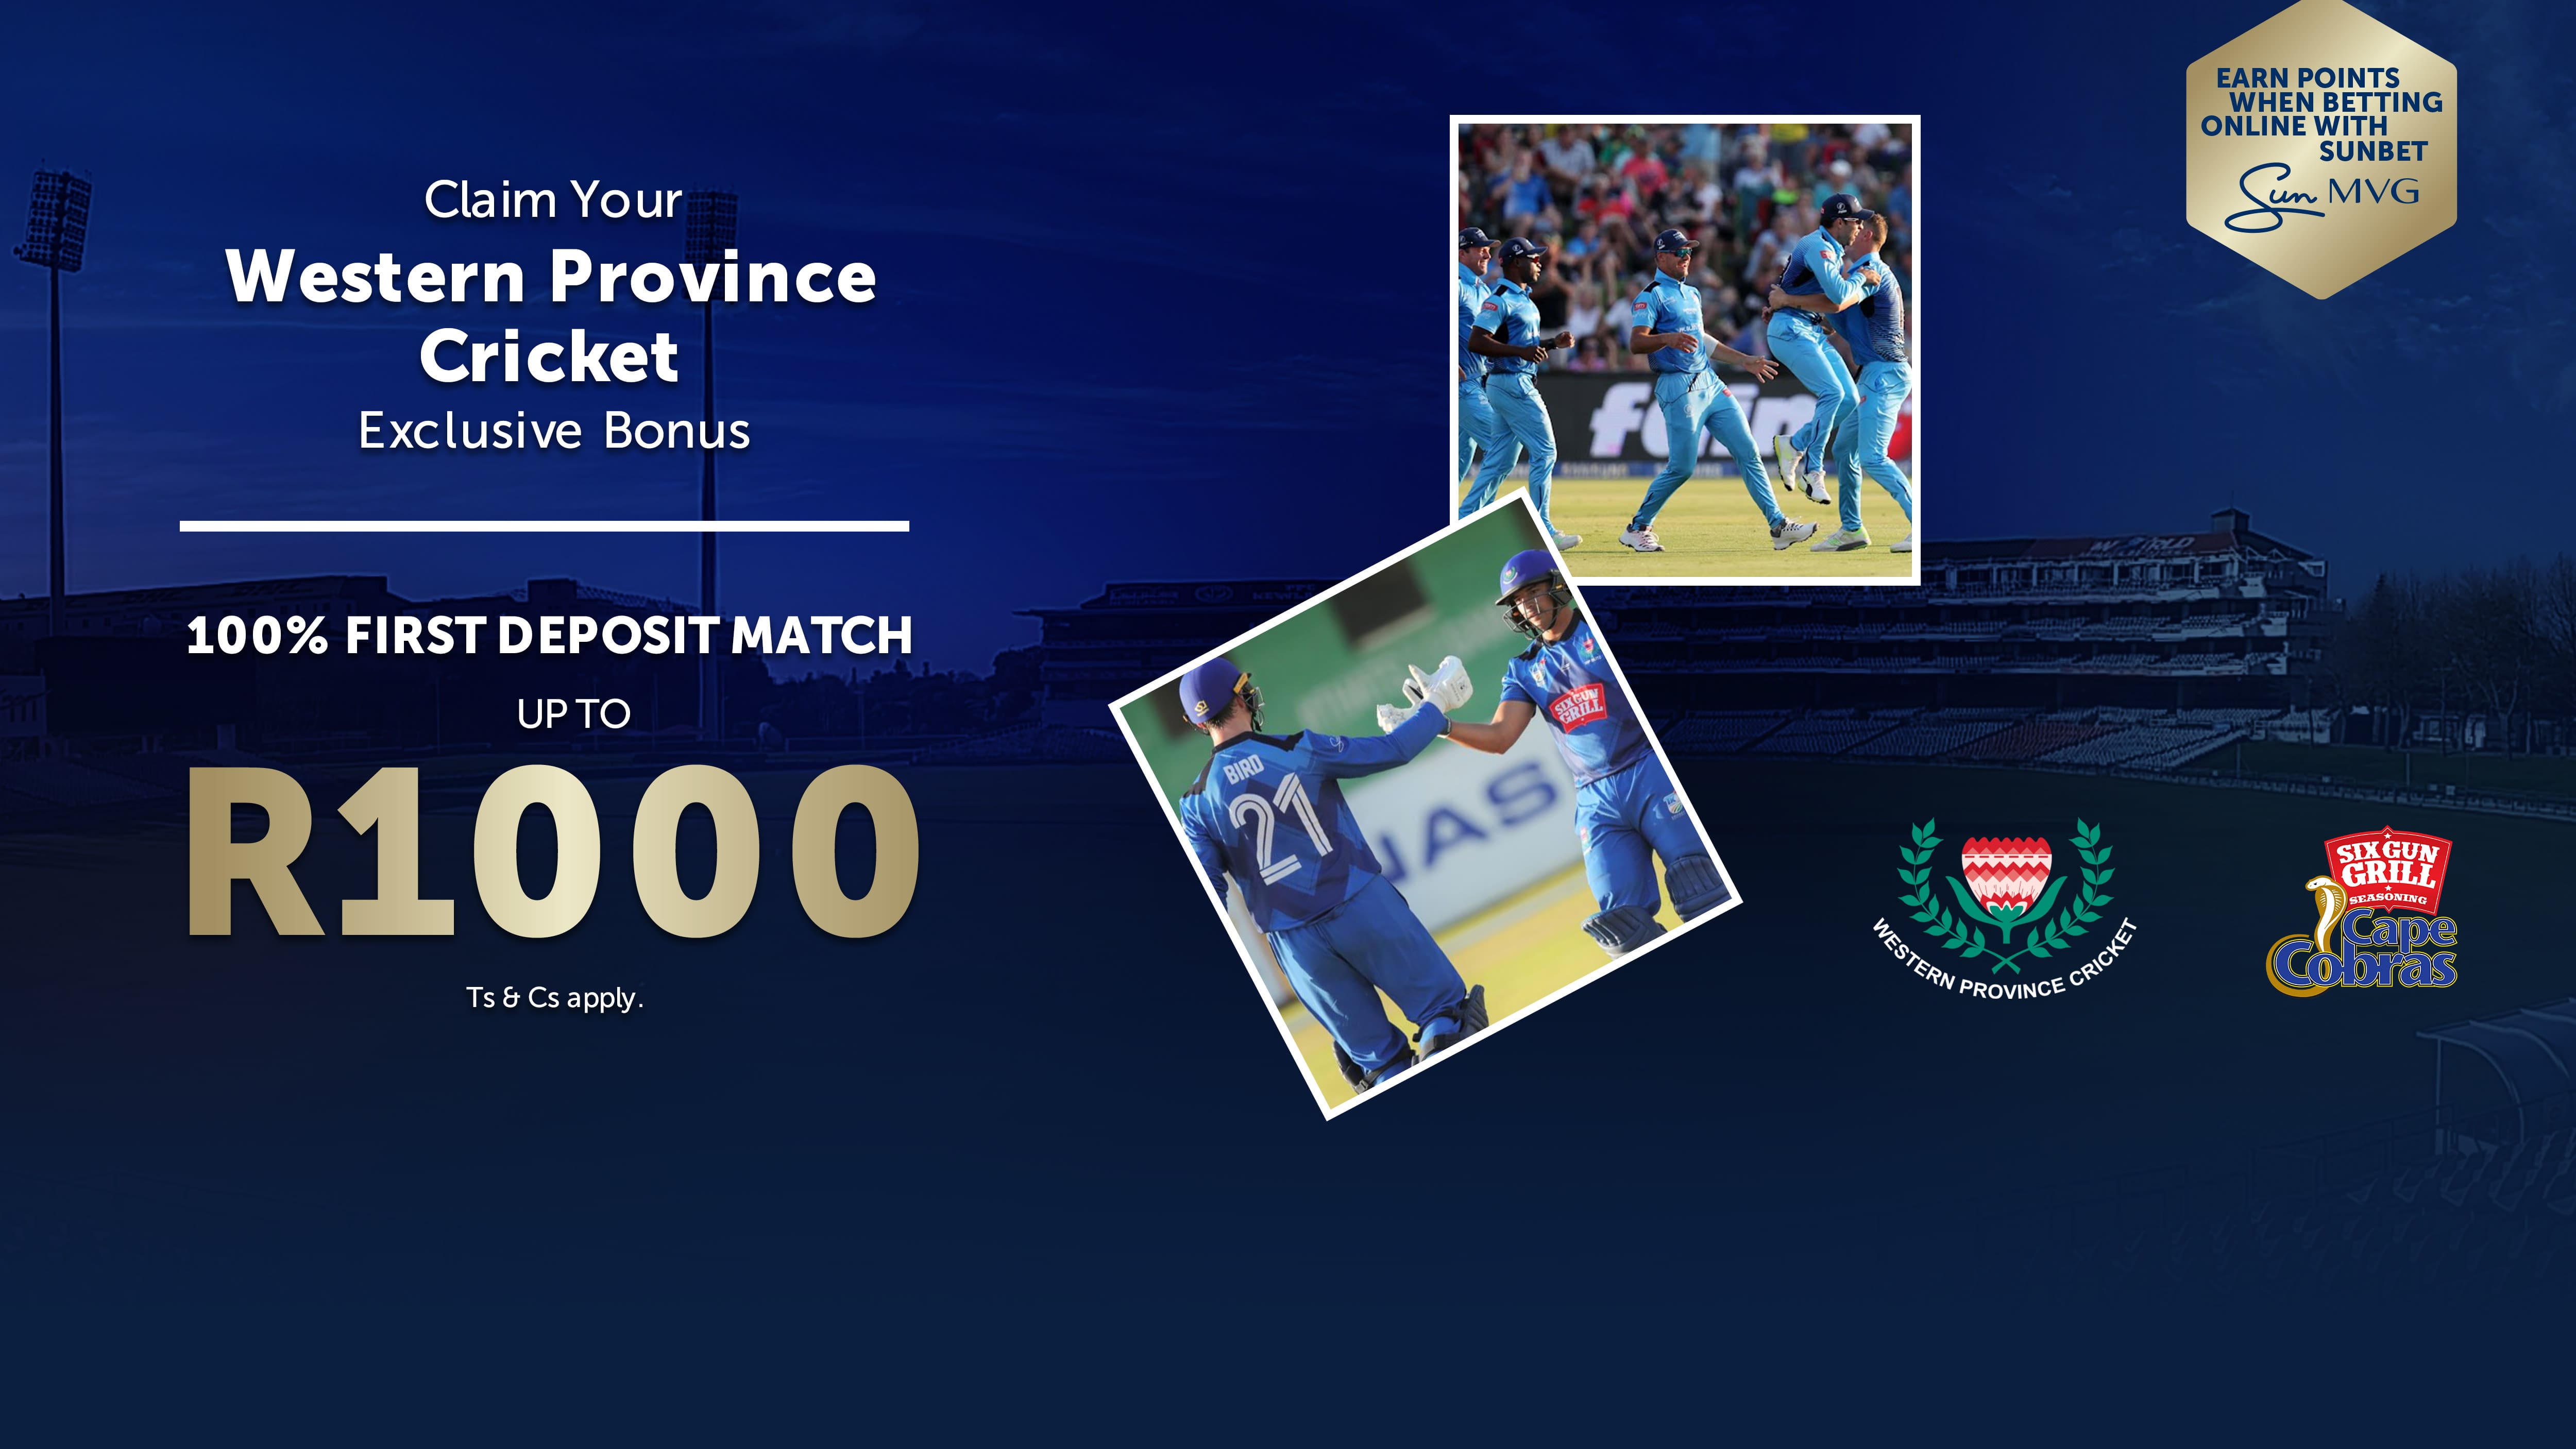 Claim Your WP Cricket Exclusive Bonus | 100% 1st Match Deposit up to R1000 